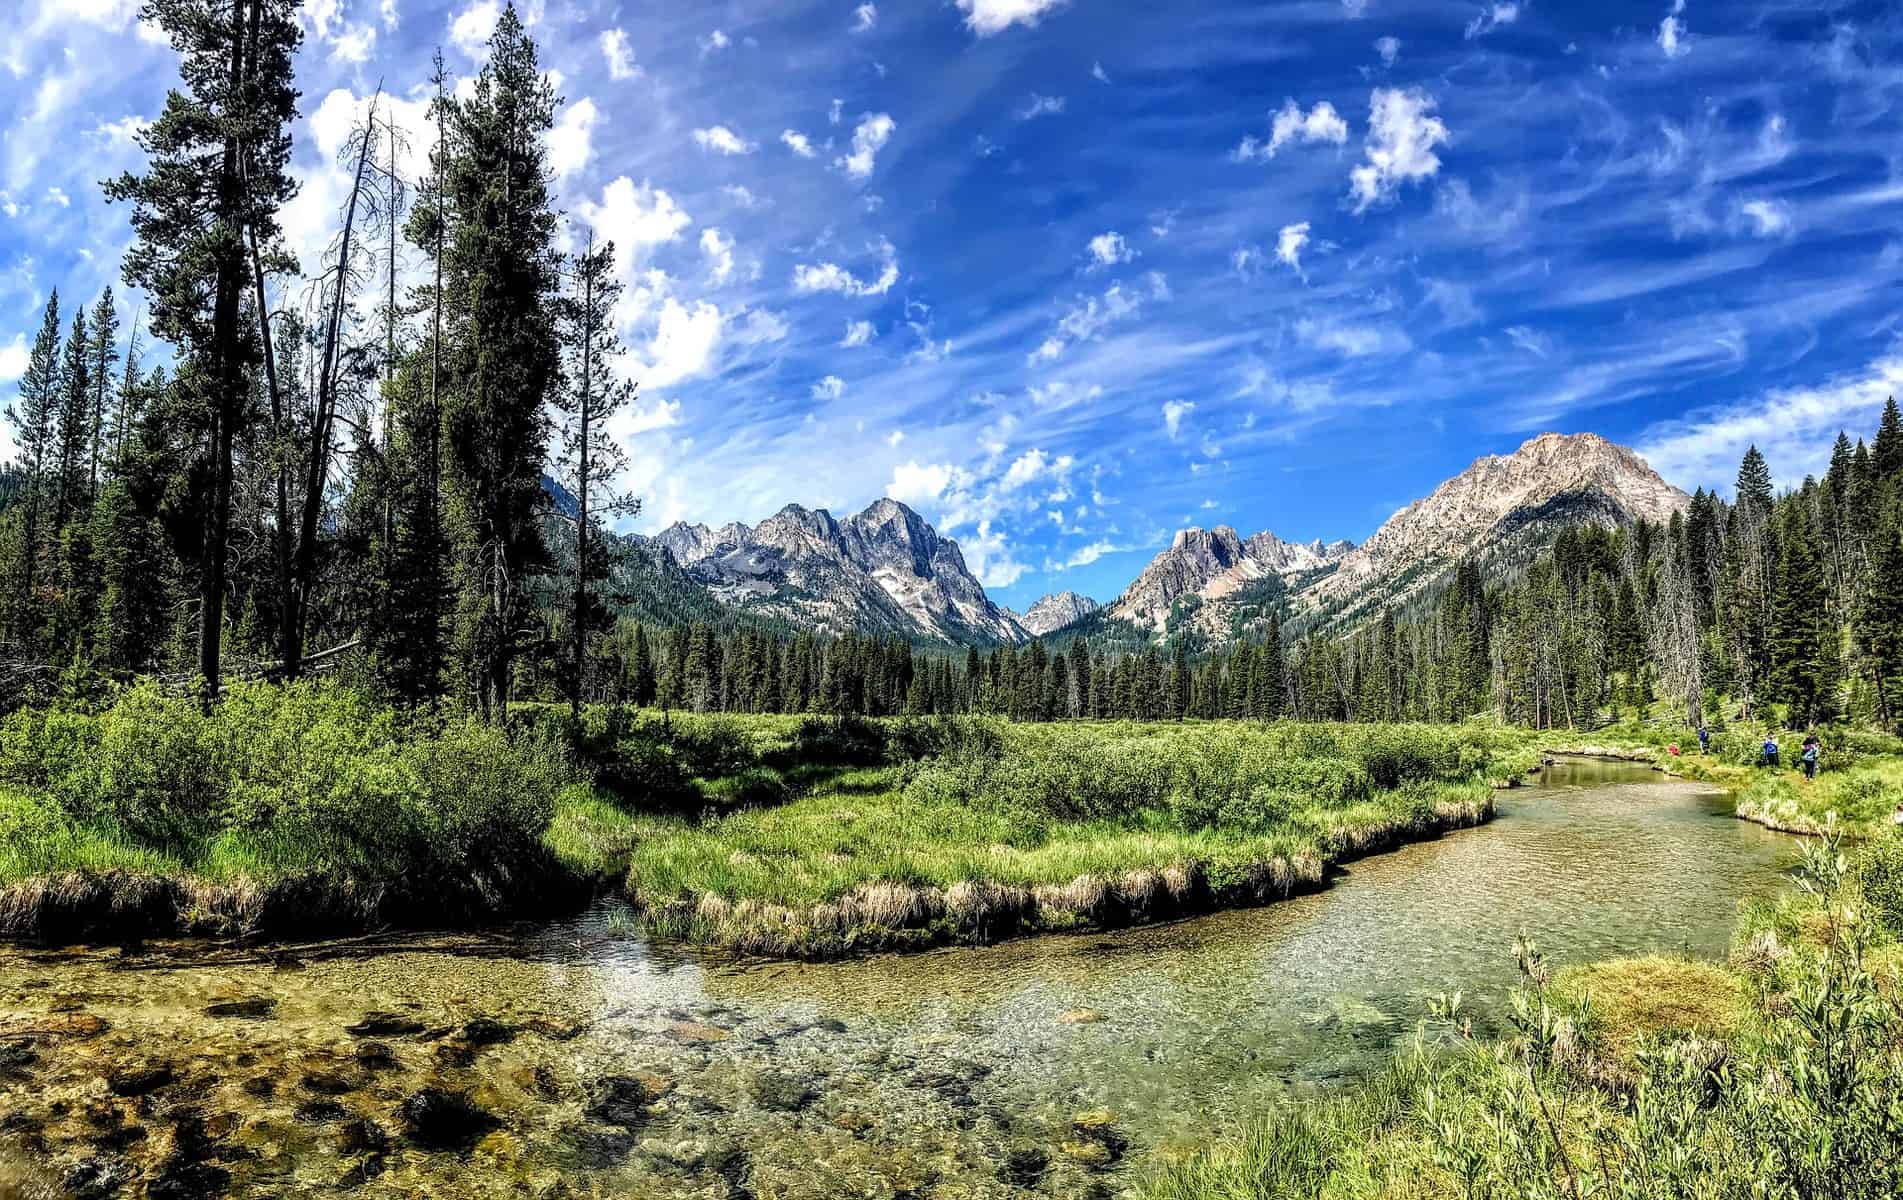 Idaho wilderness